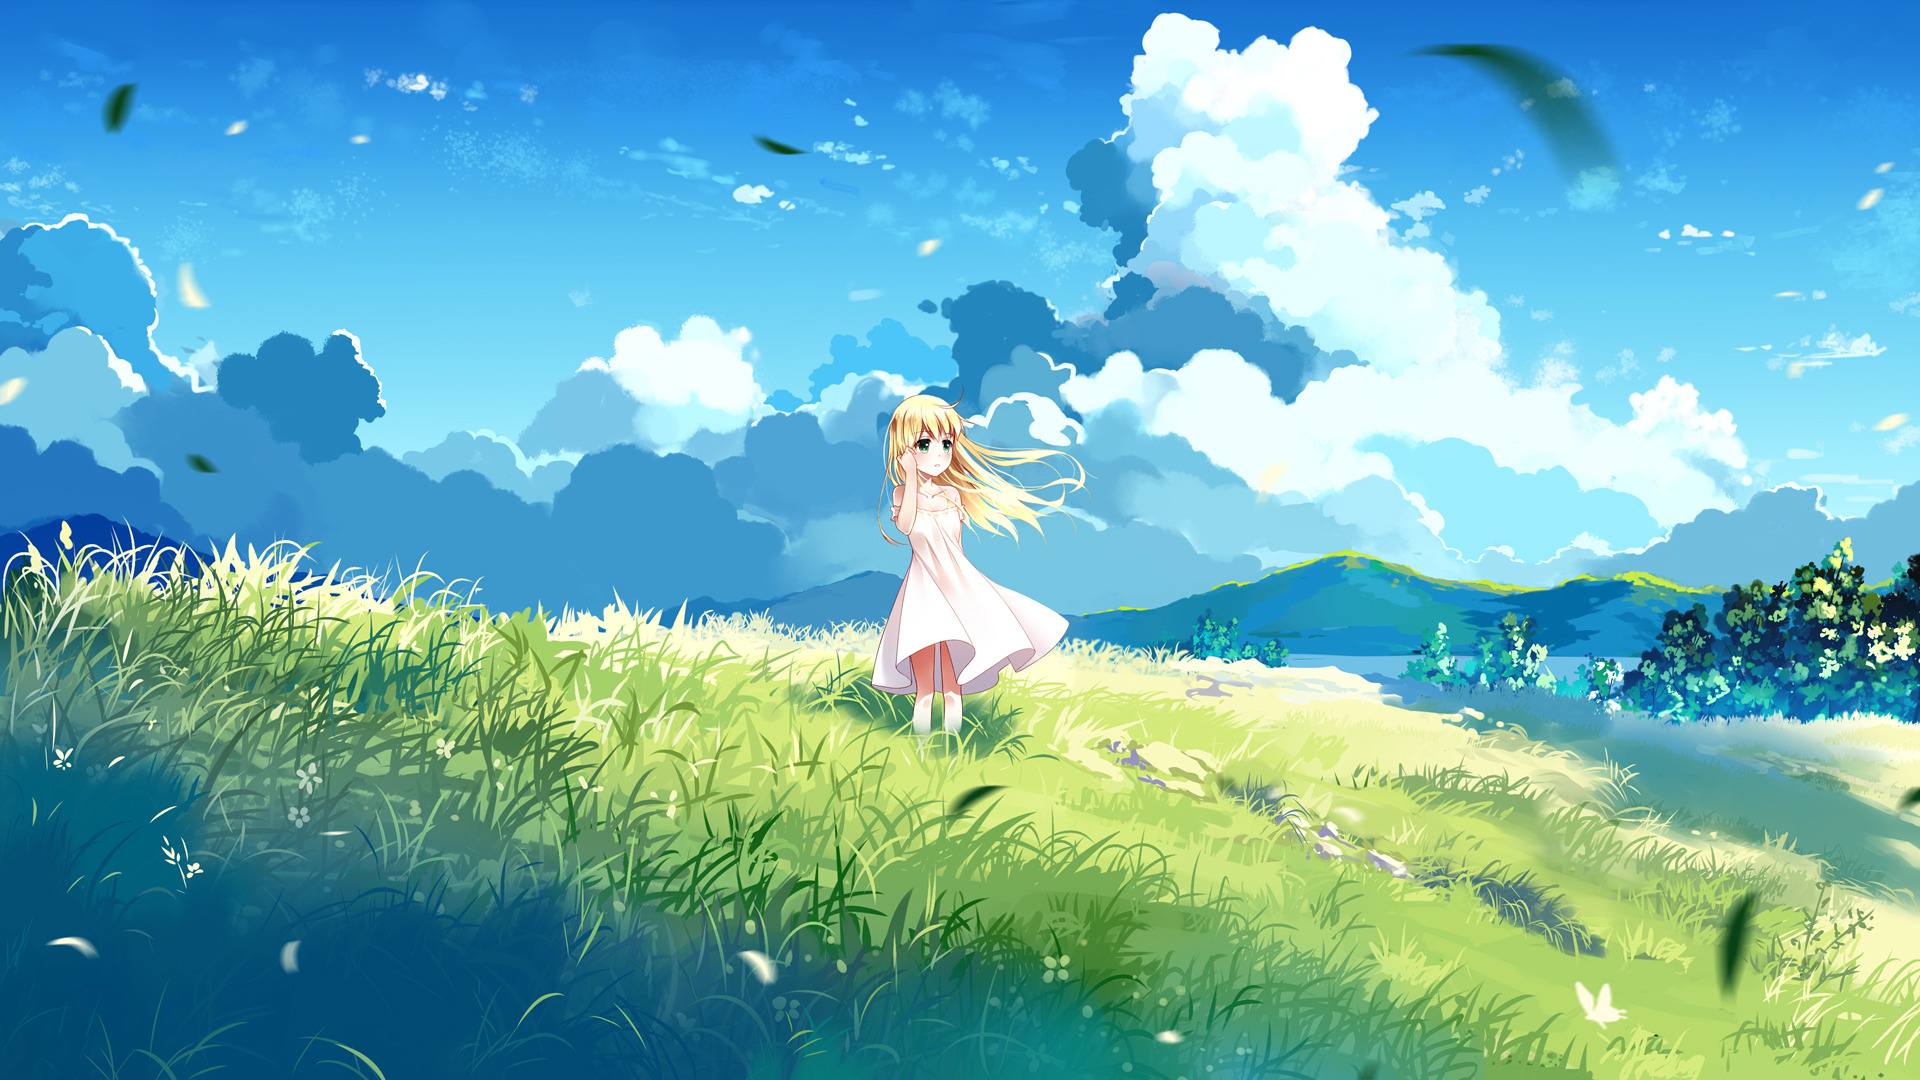 Download 1920x1080 Wallpaper Landscape Blonde Anime Girl Cute